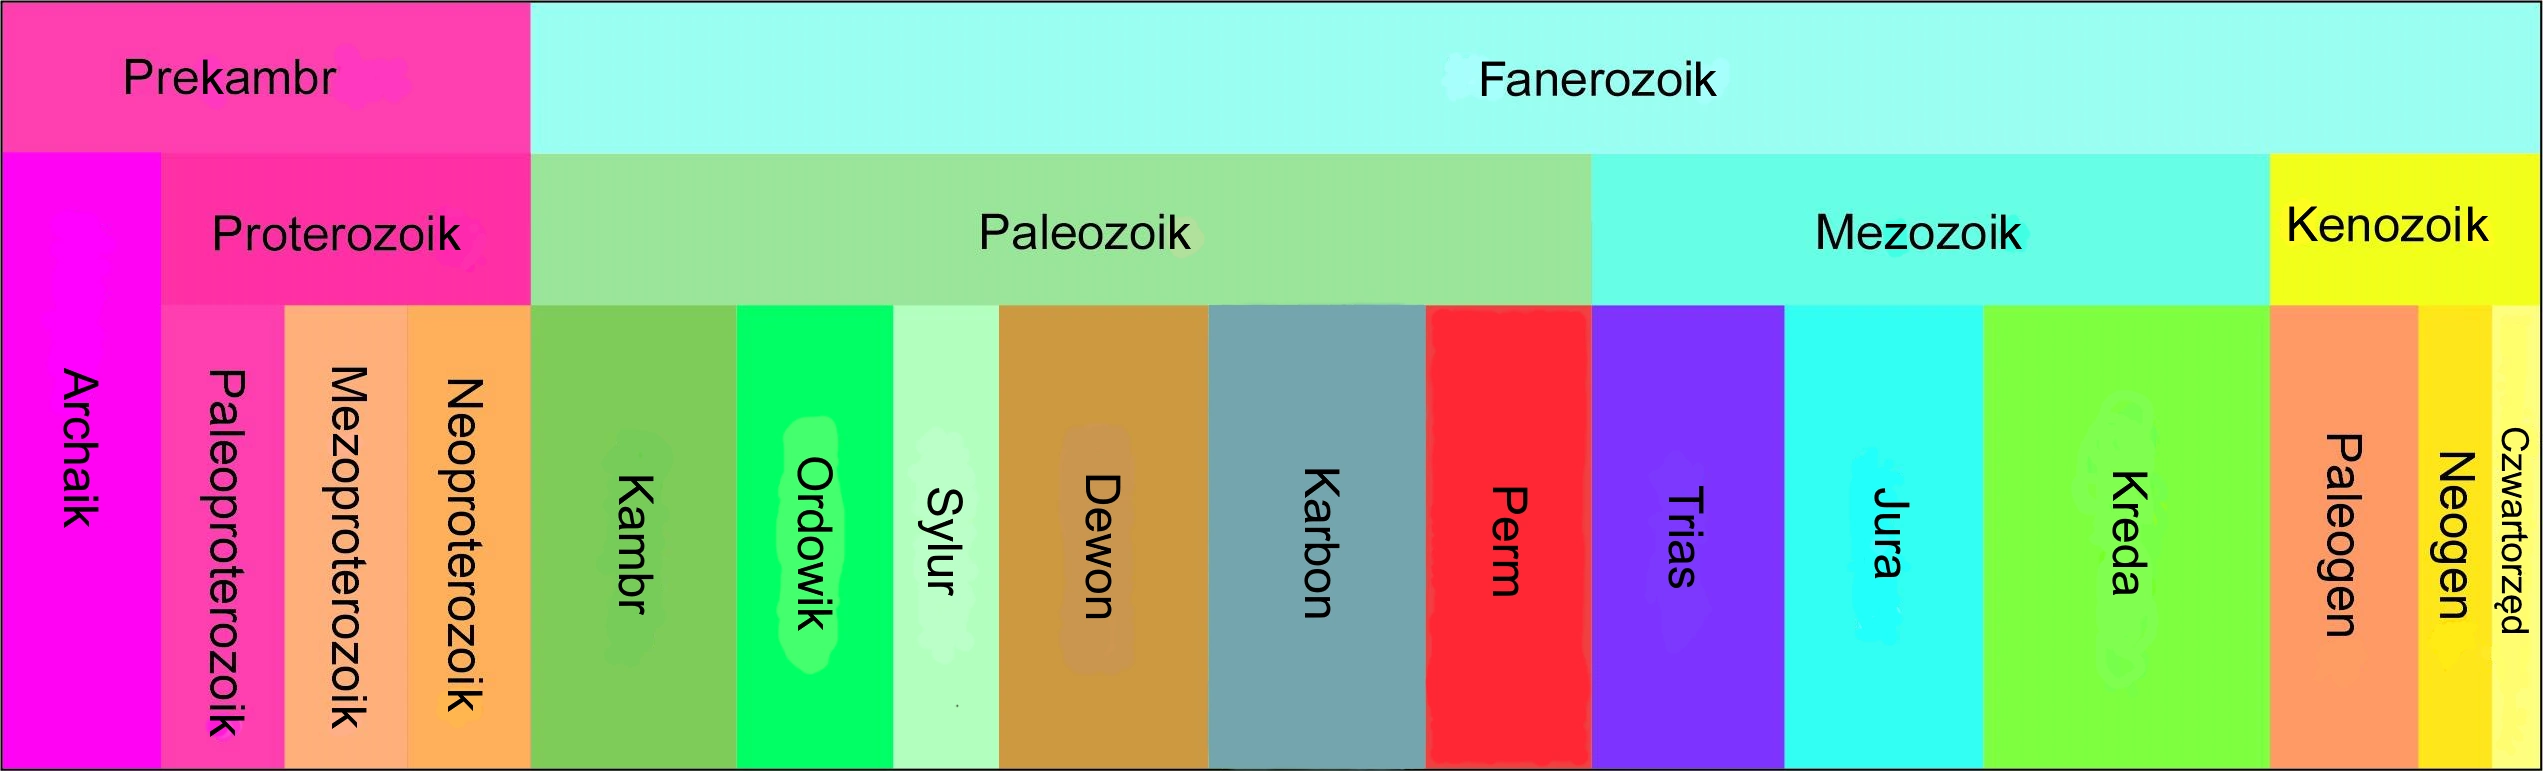 tabela stratygraficzna